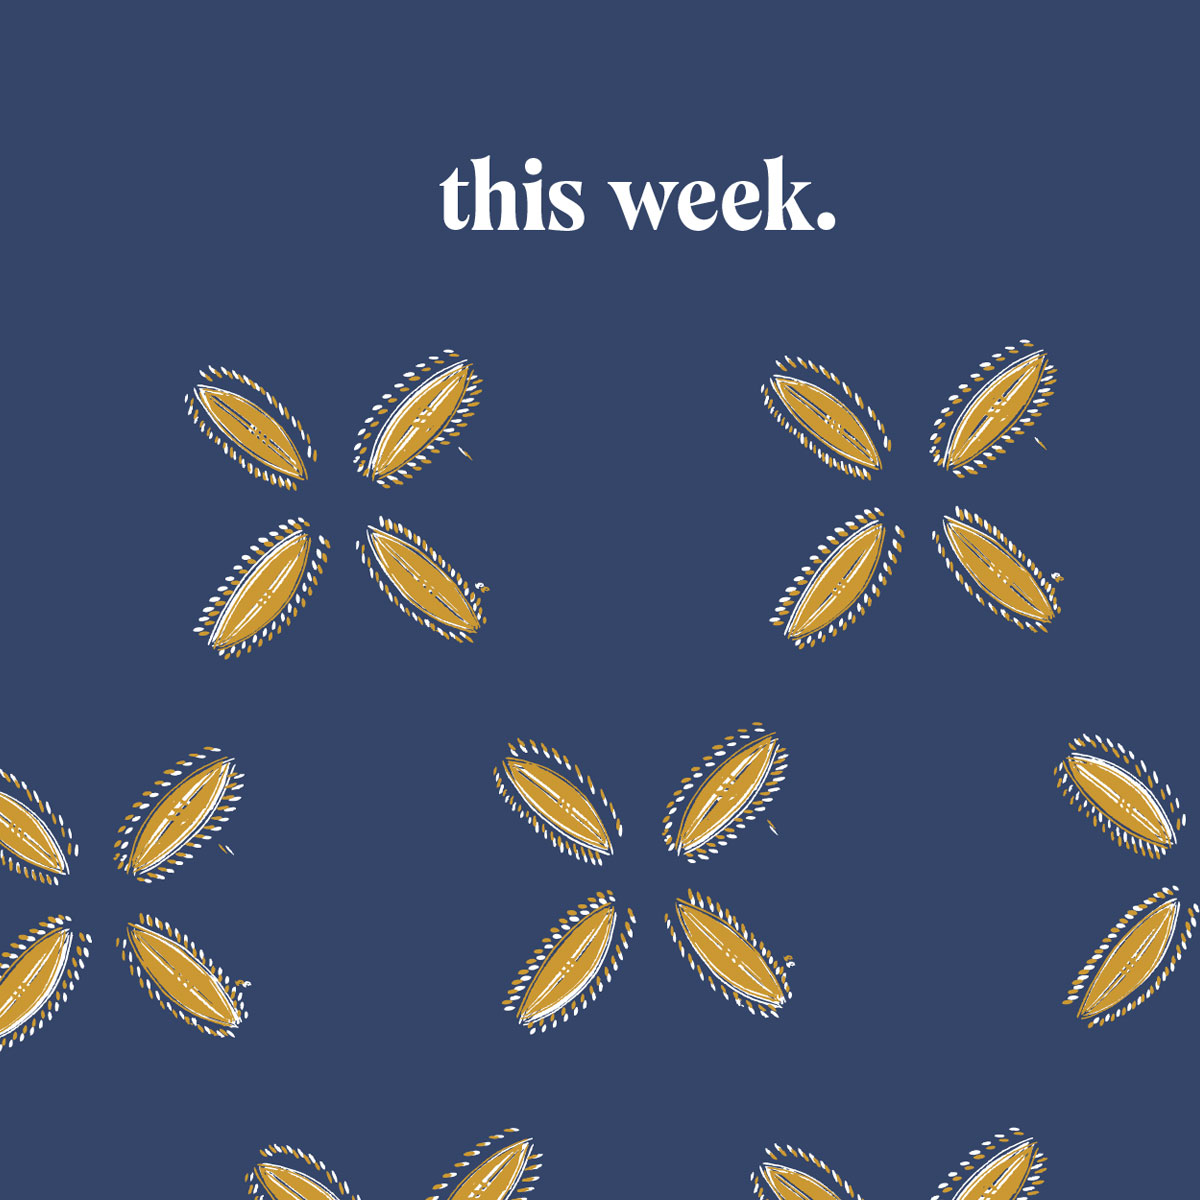 Undated Weekly Planner – blue cowrie